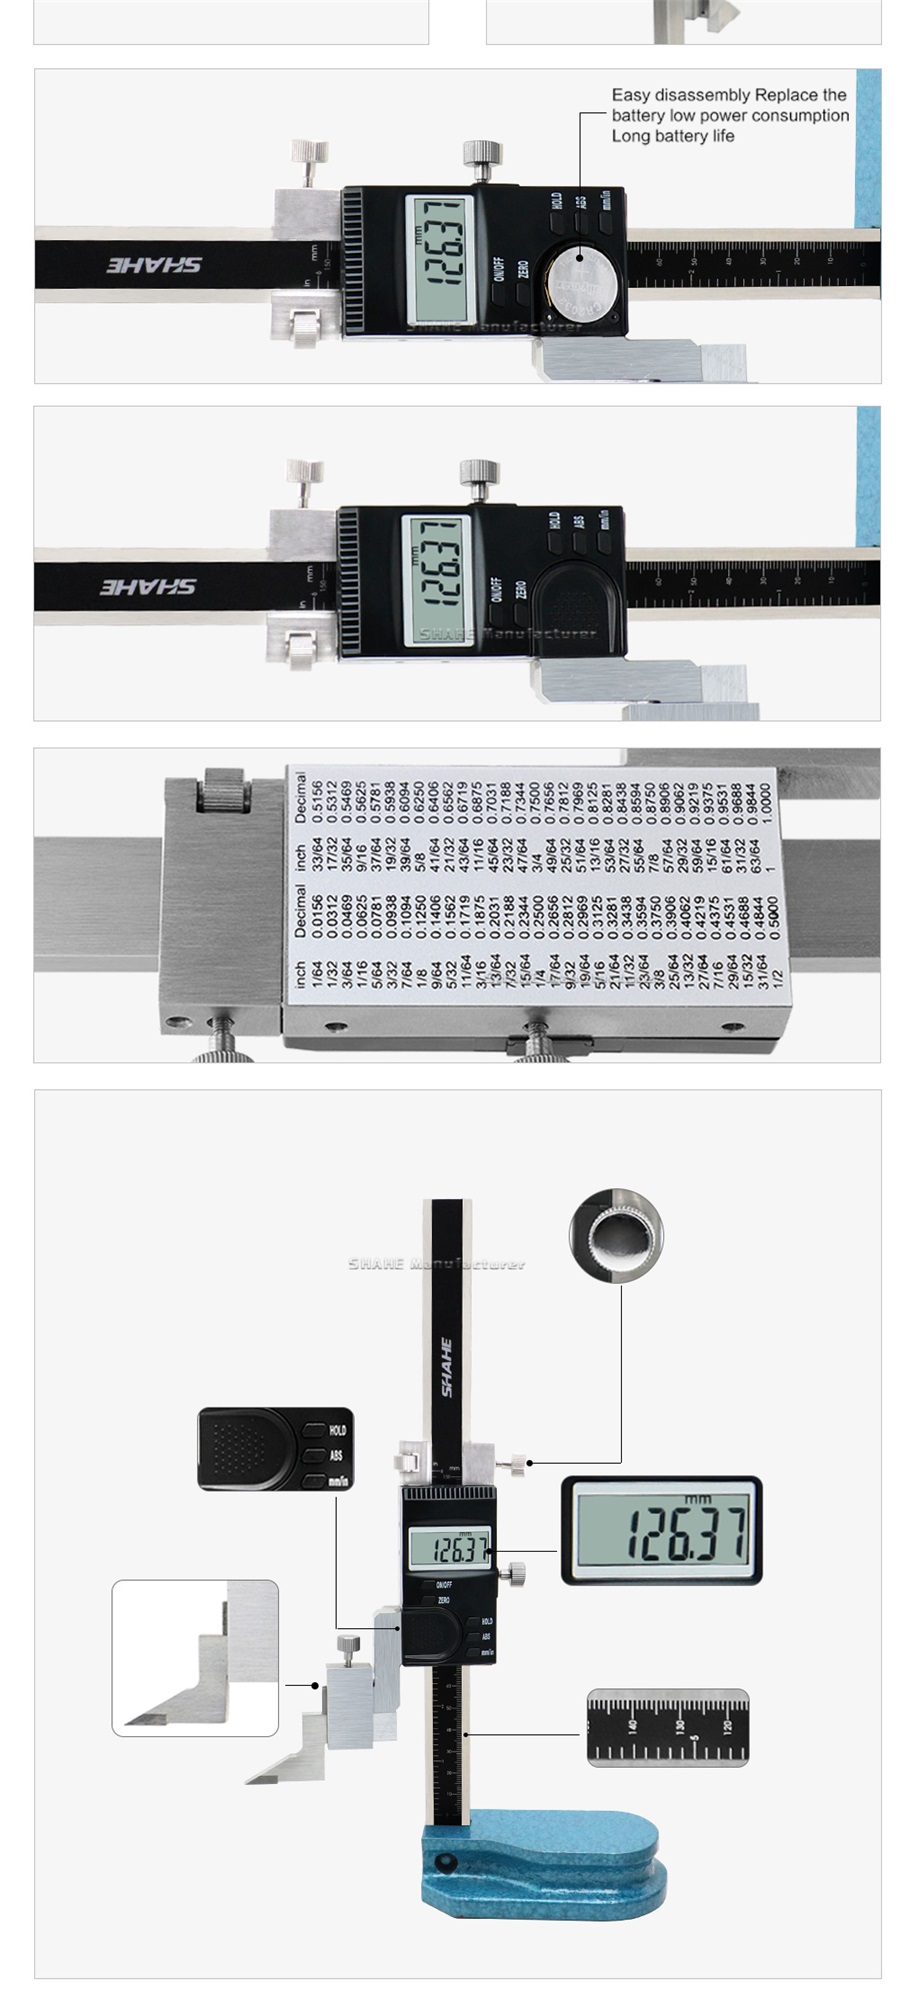 Shahe electronic altimeter